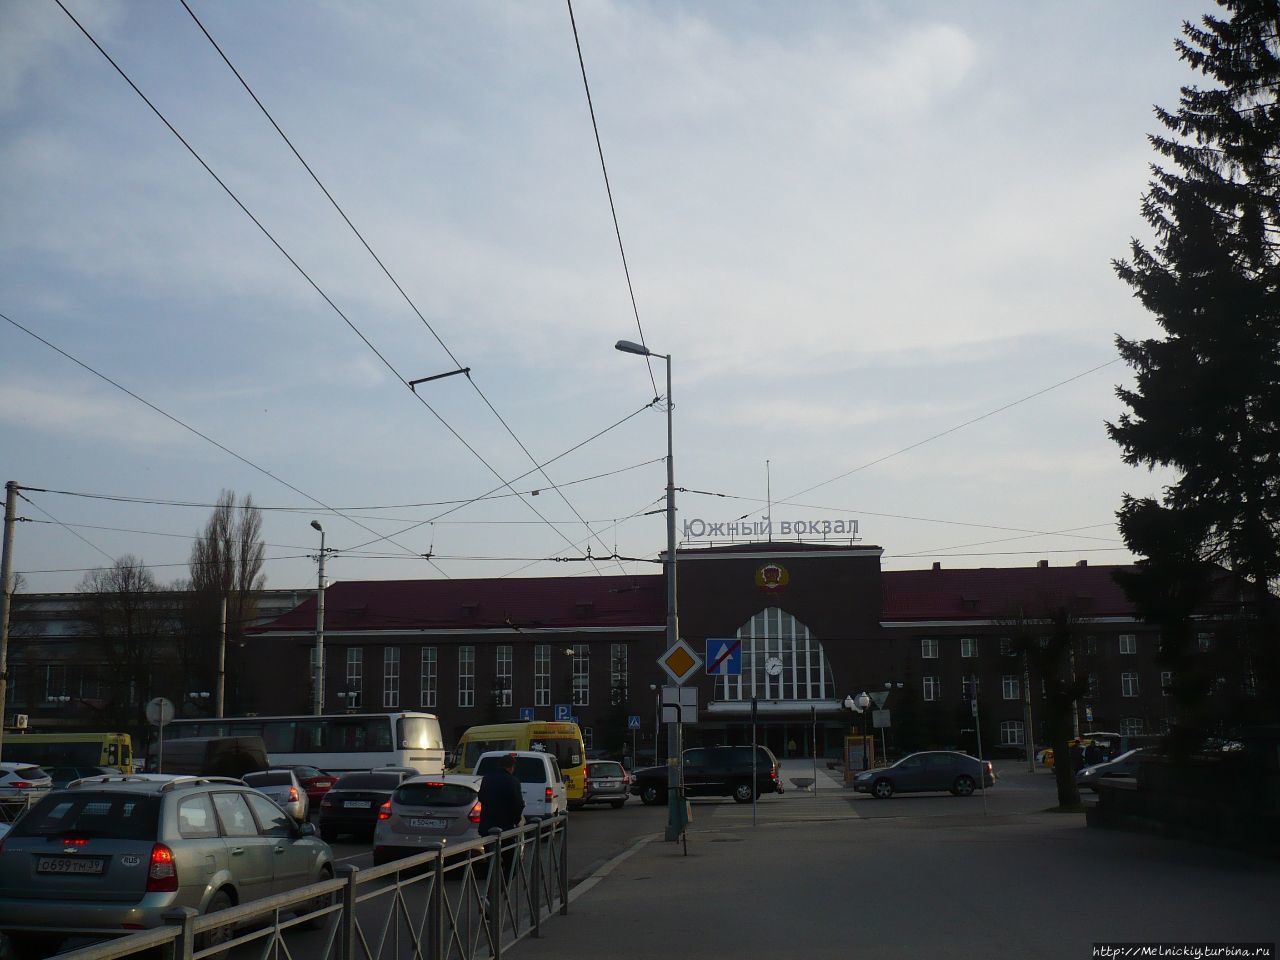 Южный вокзал / South Railway Station